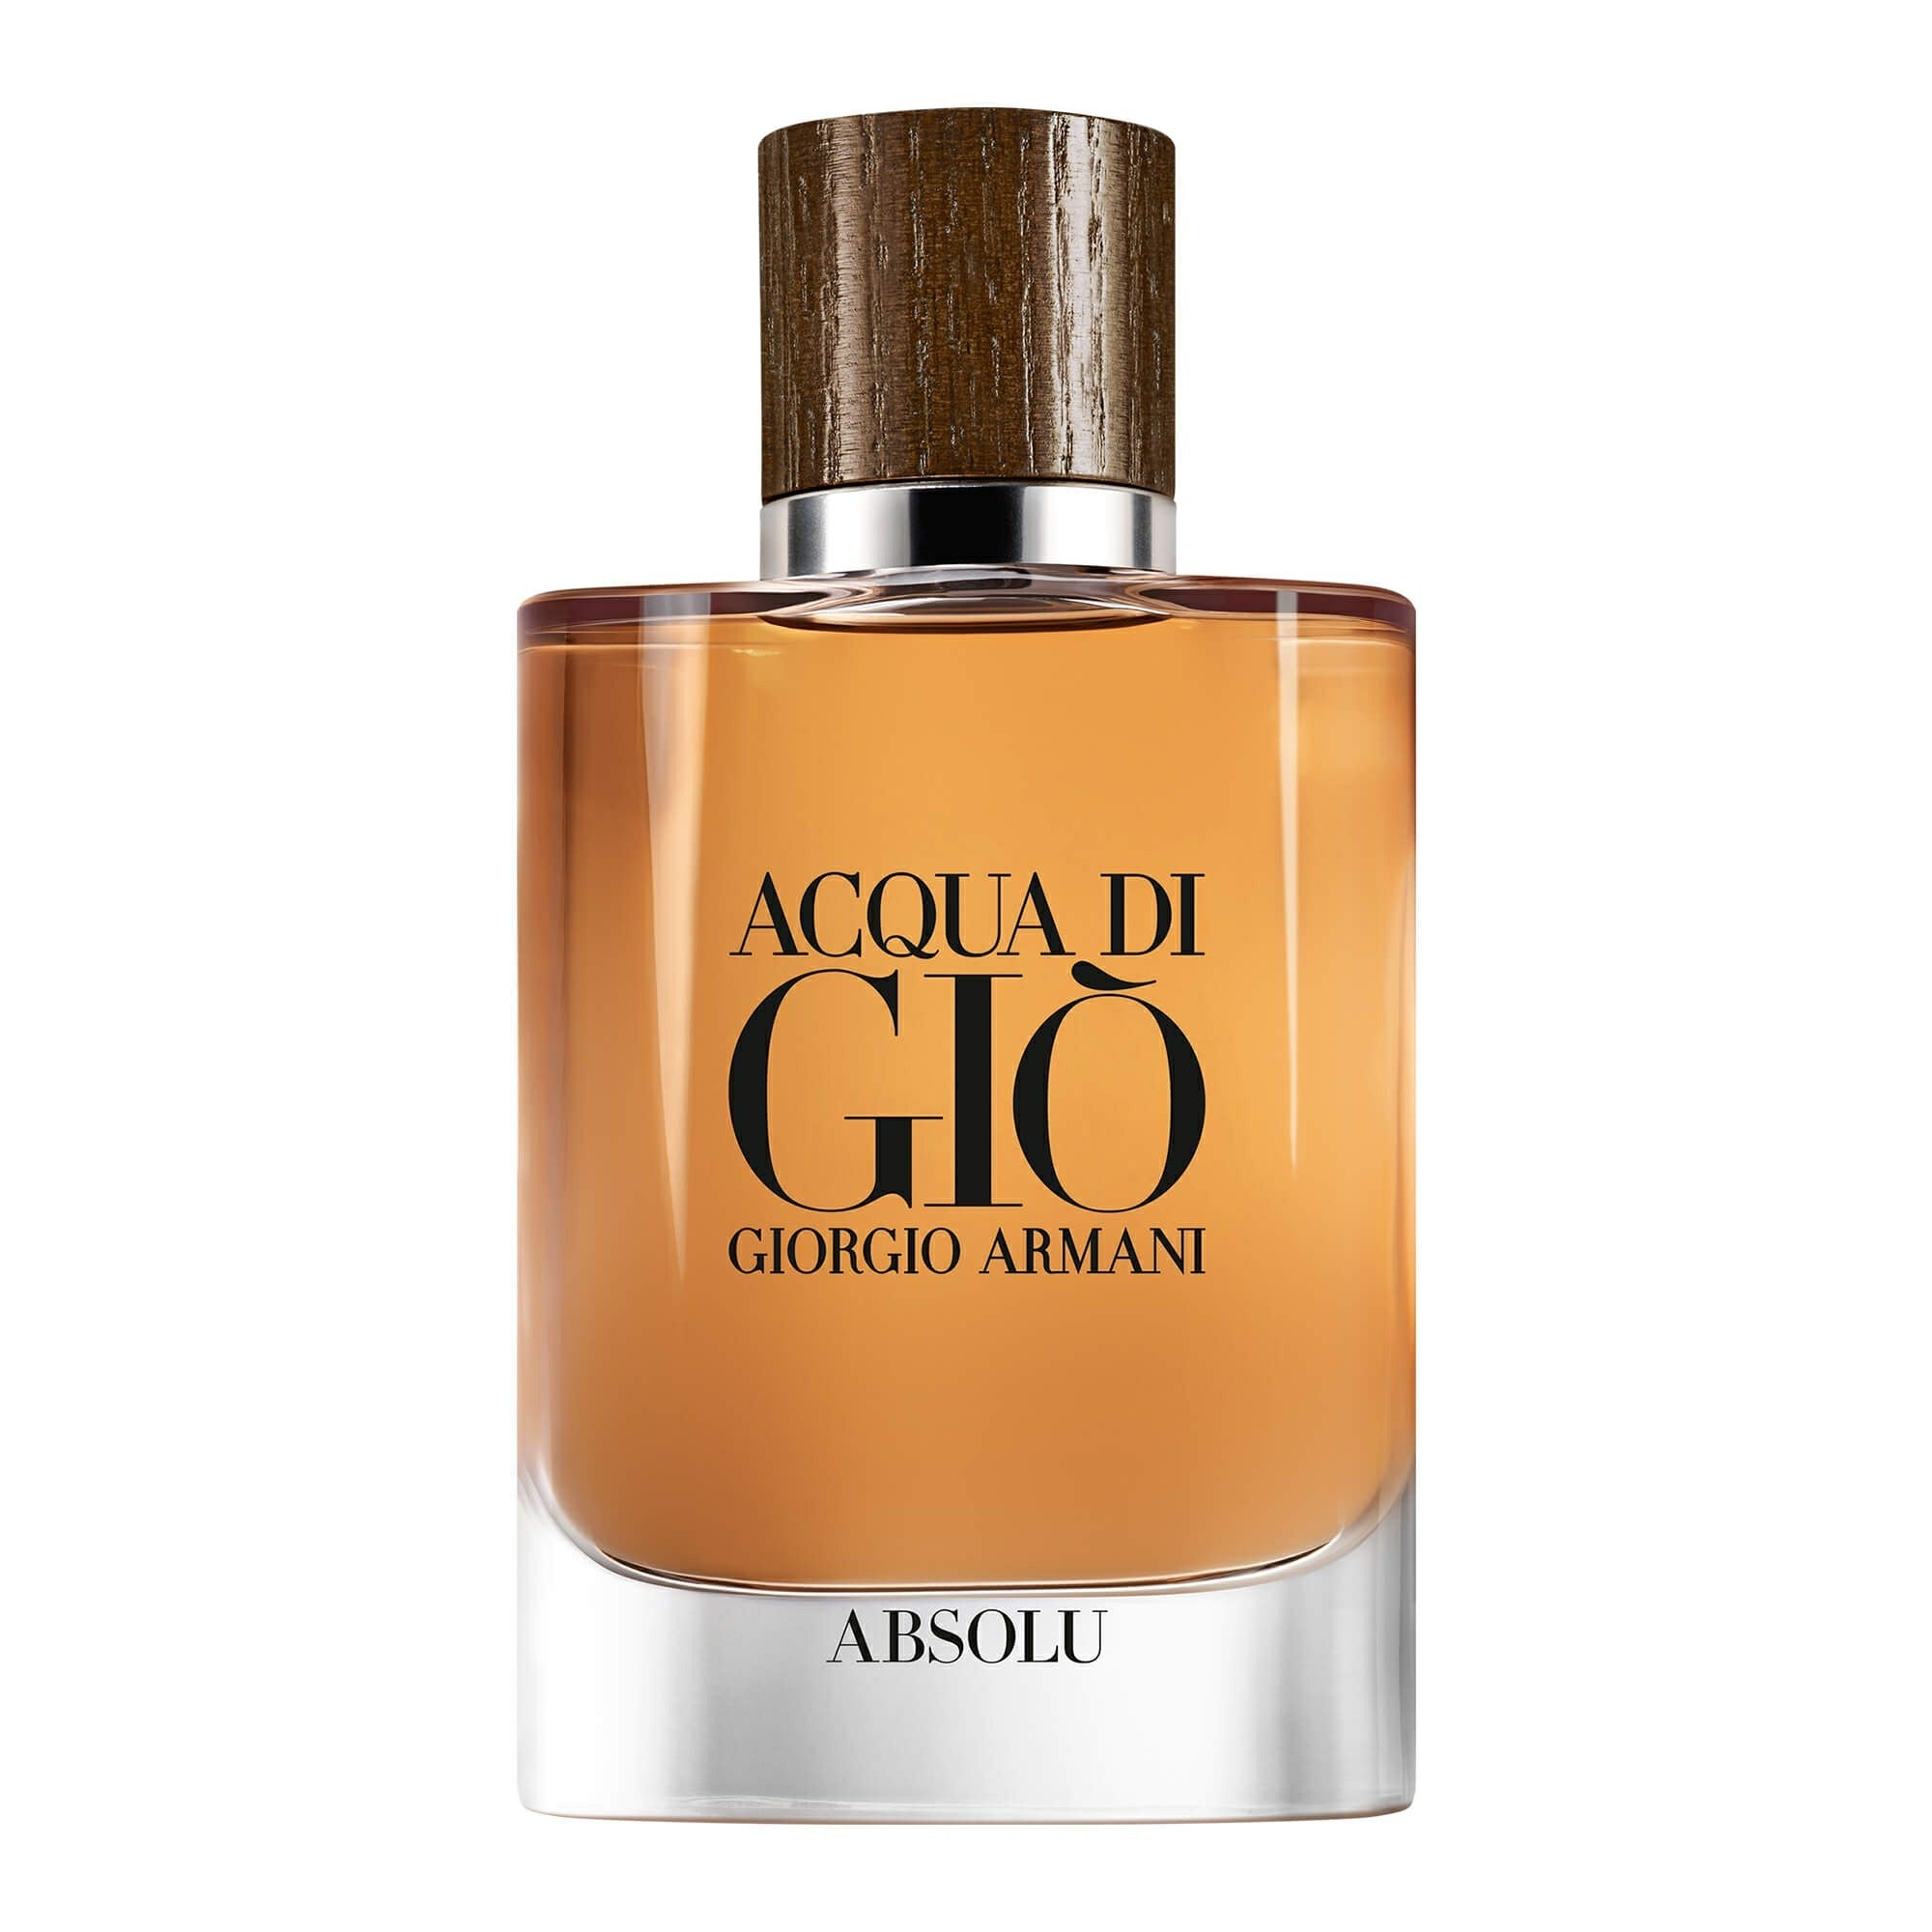 Giorgio Armani is a Aqua Eau Gio Eau de Parfum - 75ML